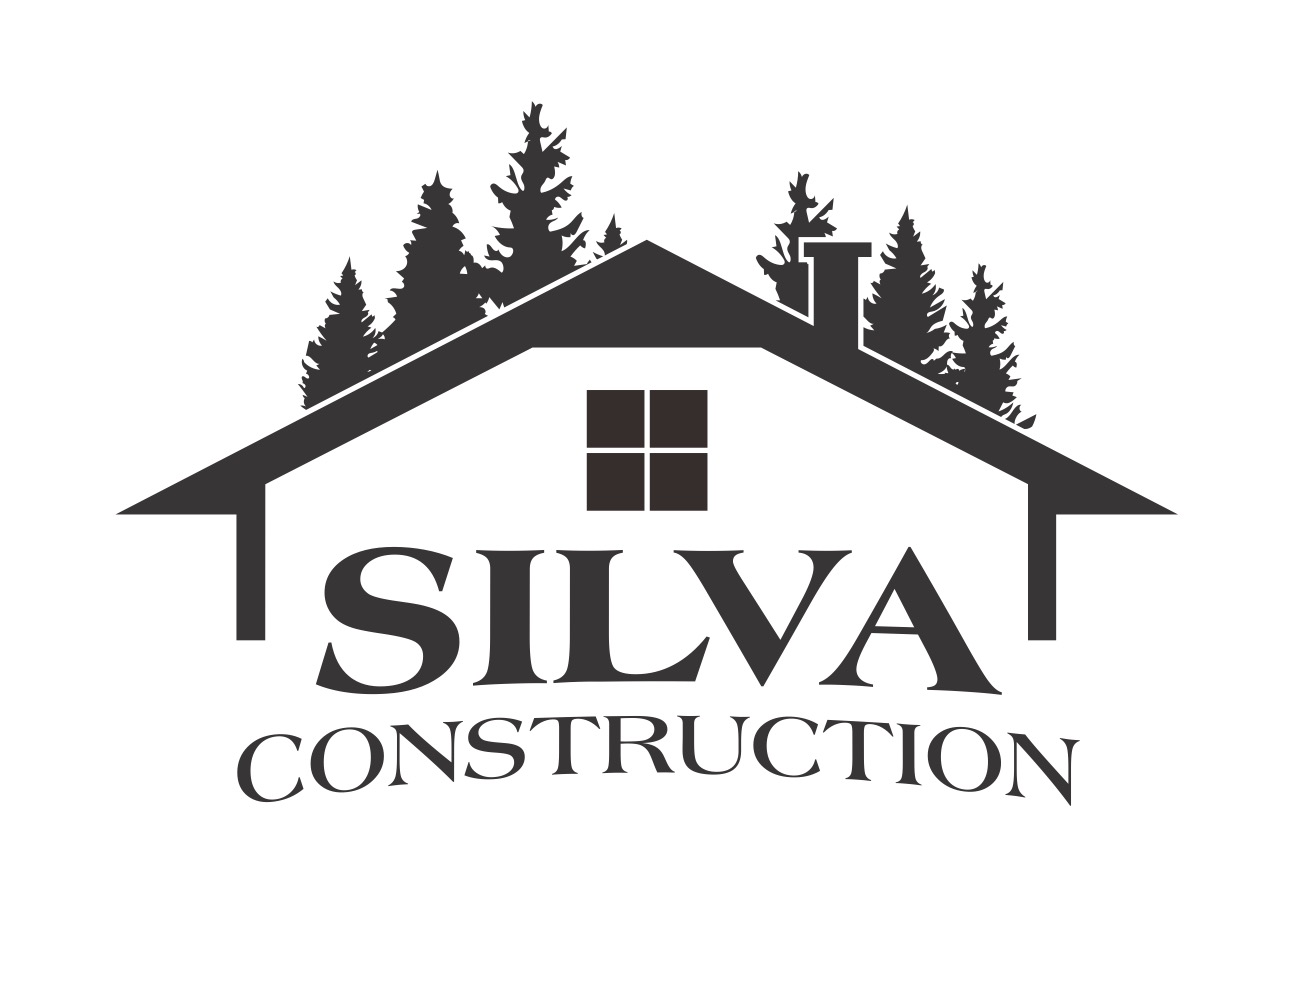 Silva Construction Logo